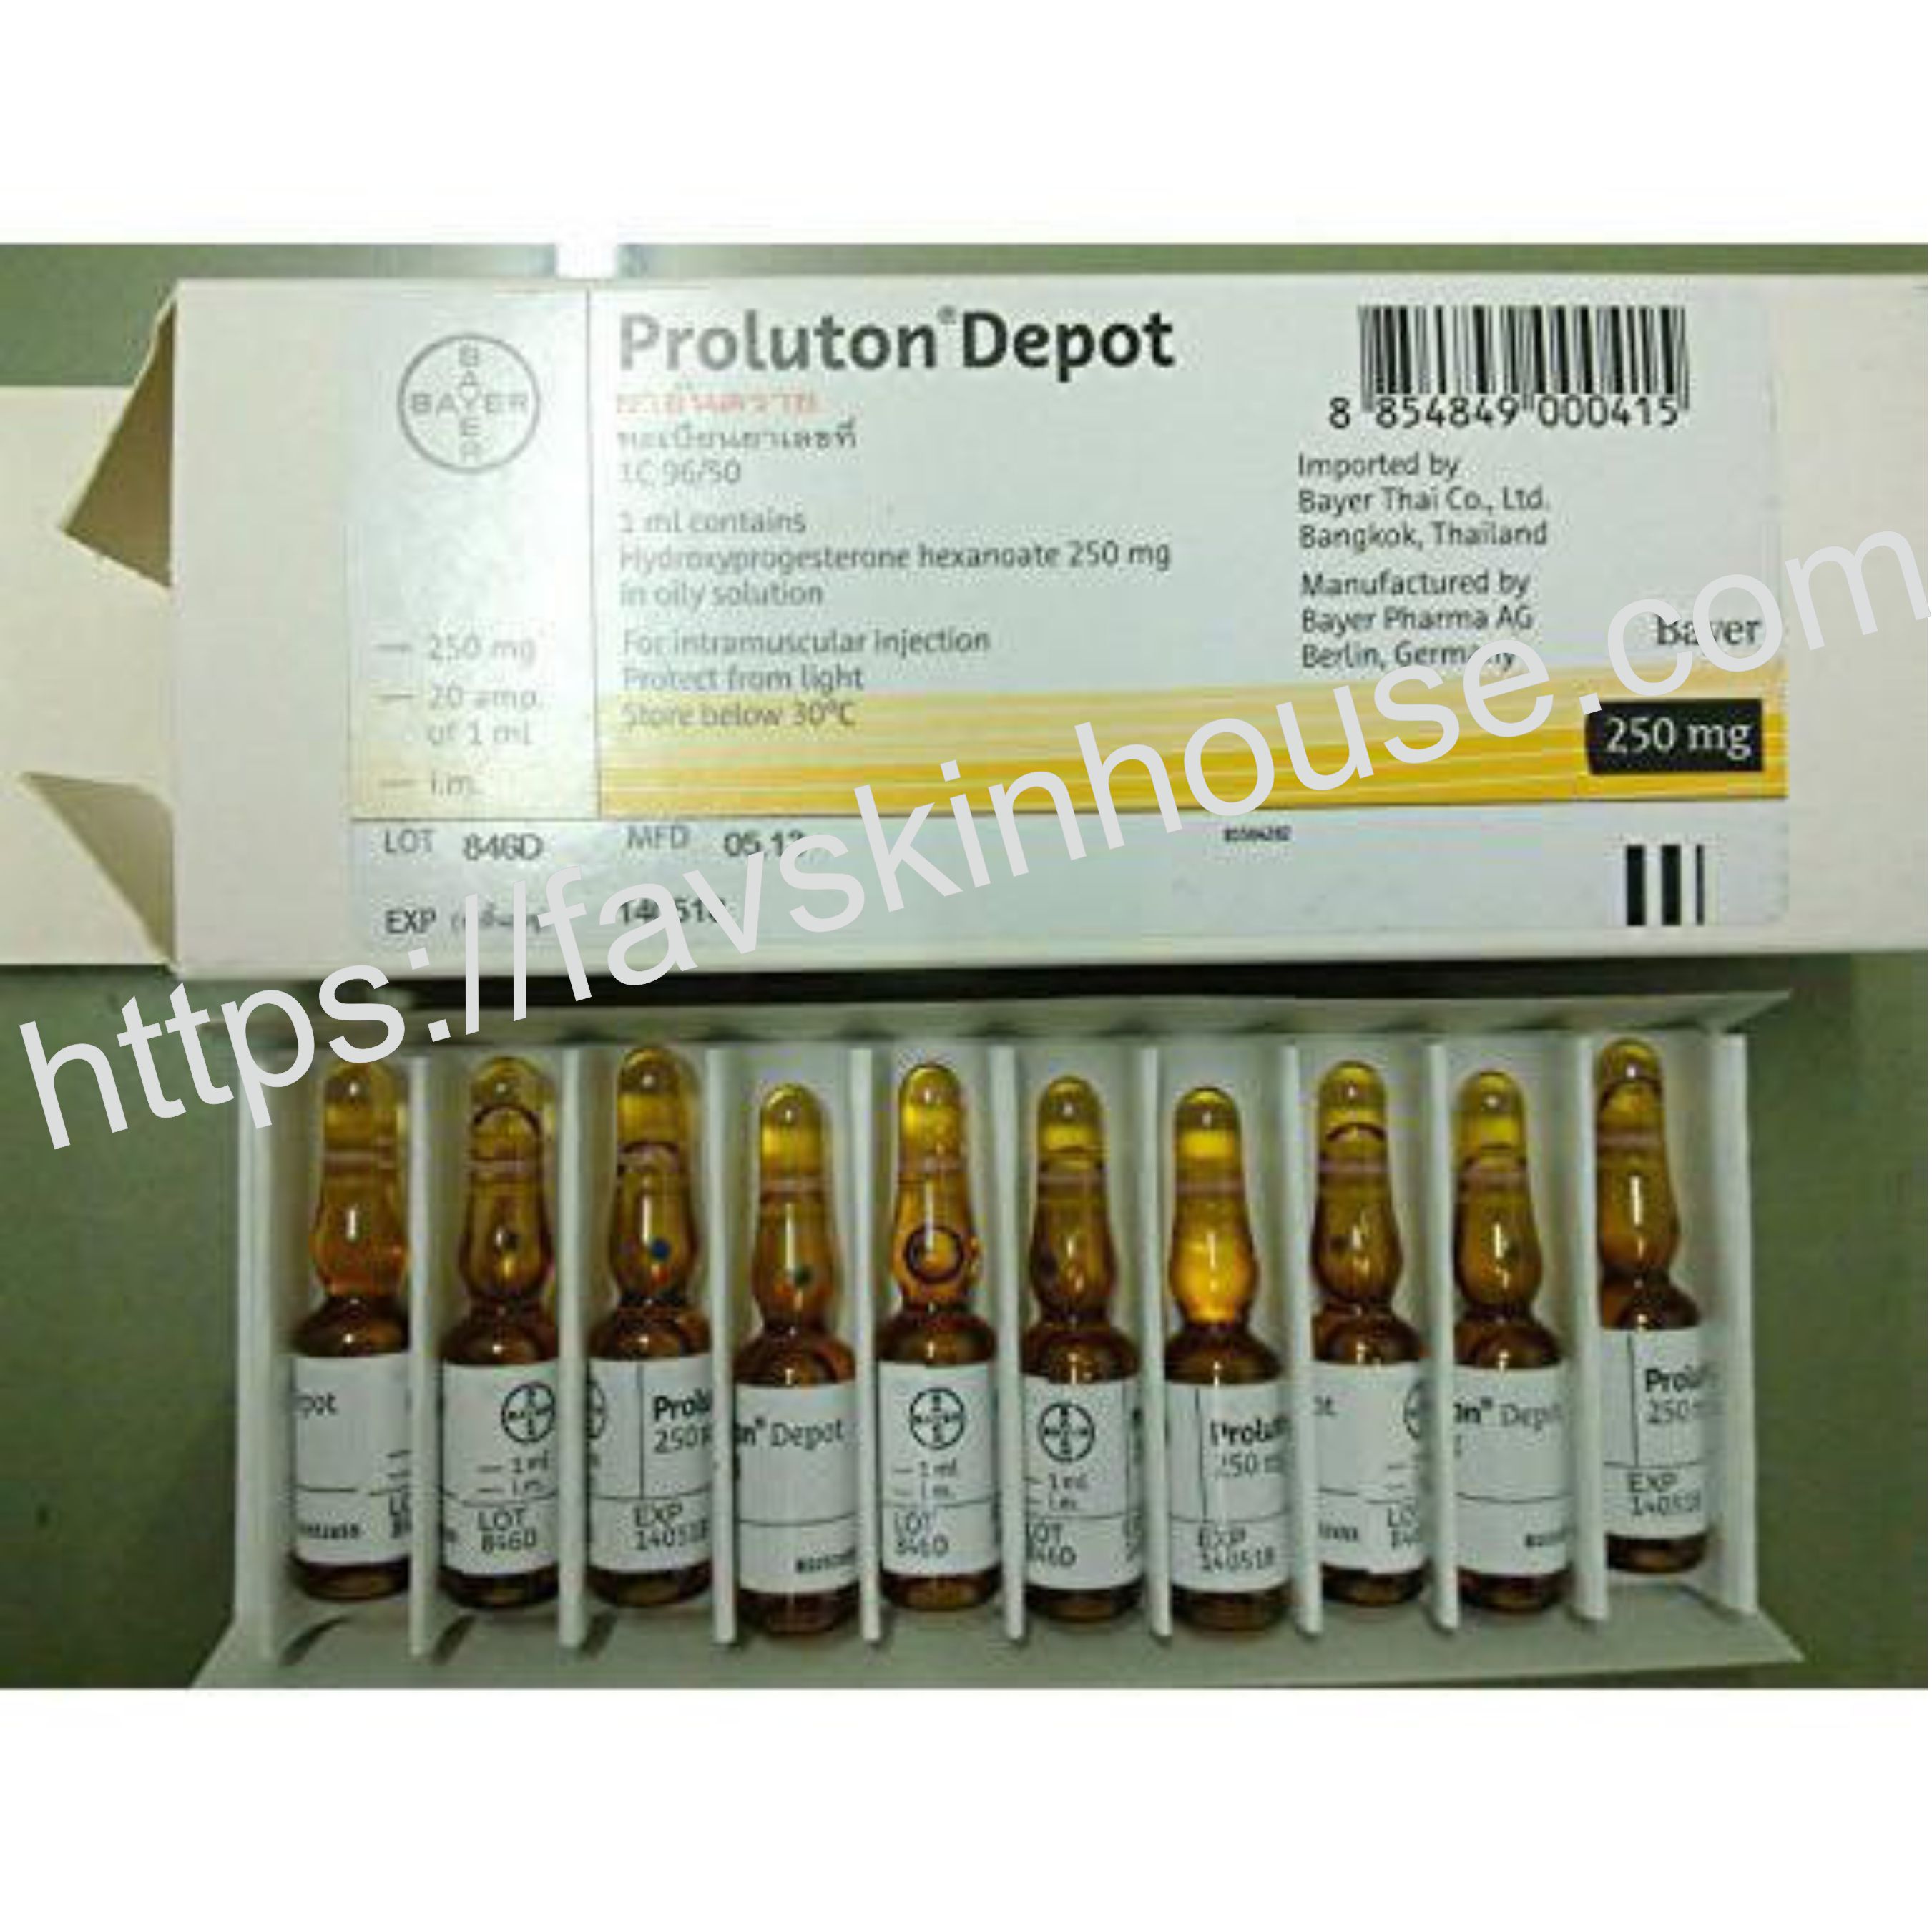 Proluton Depot 250 mg, Hydroxyprogesterone Caproate 250 mg